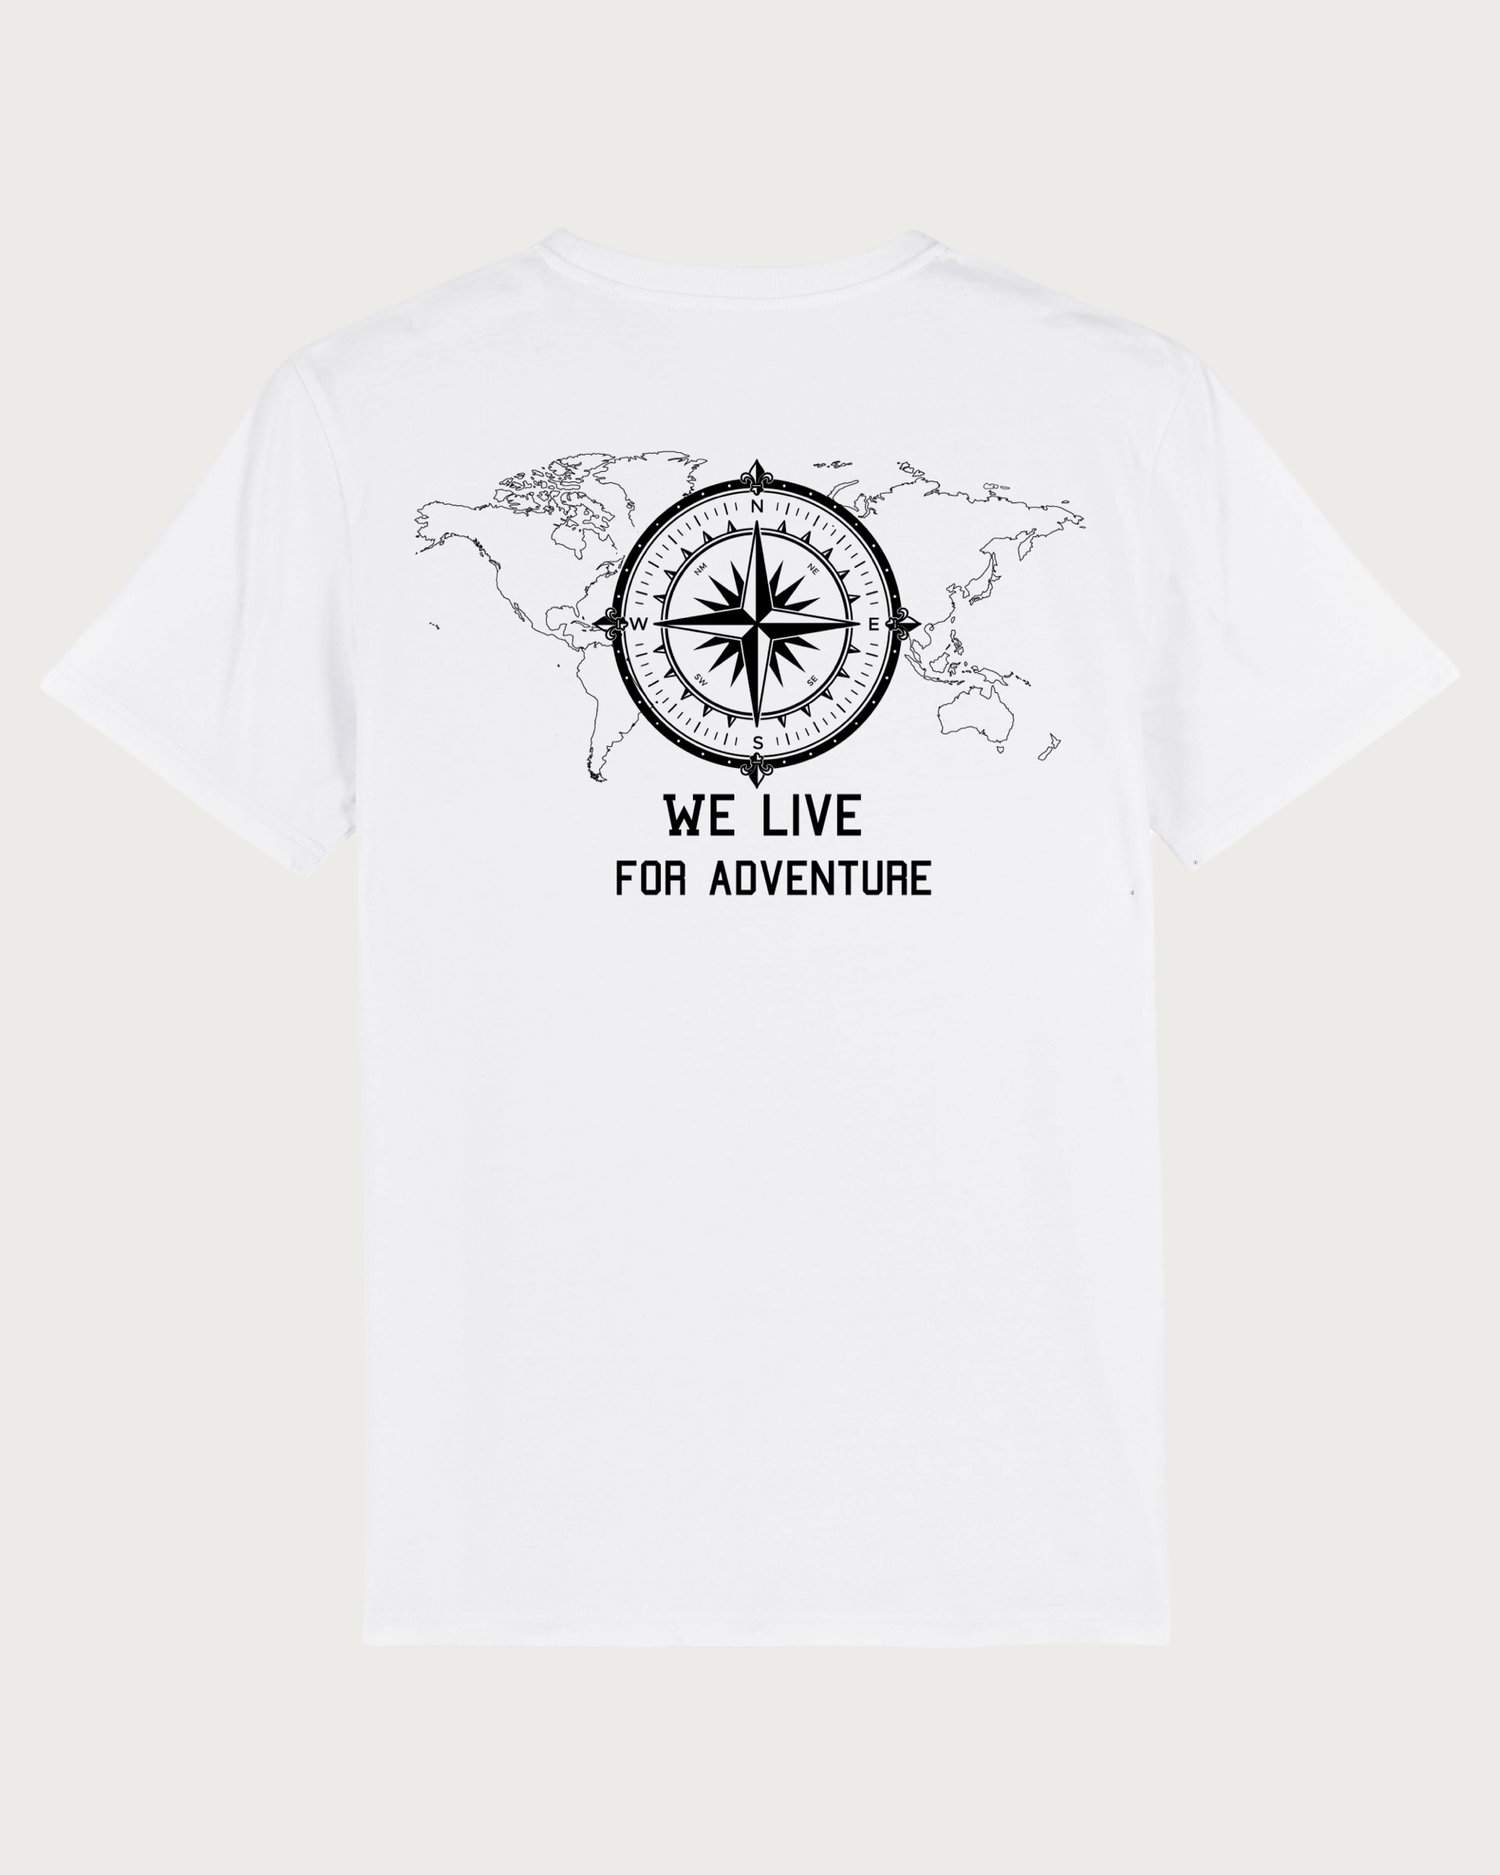 We live for Adventure T-shirt - Seaman&